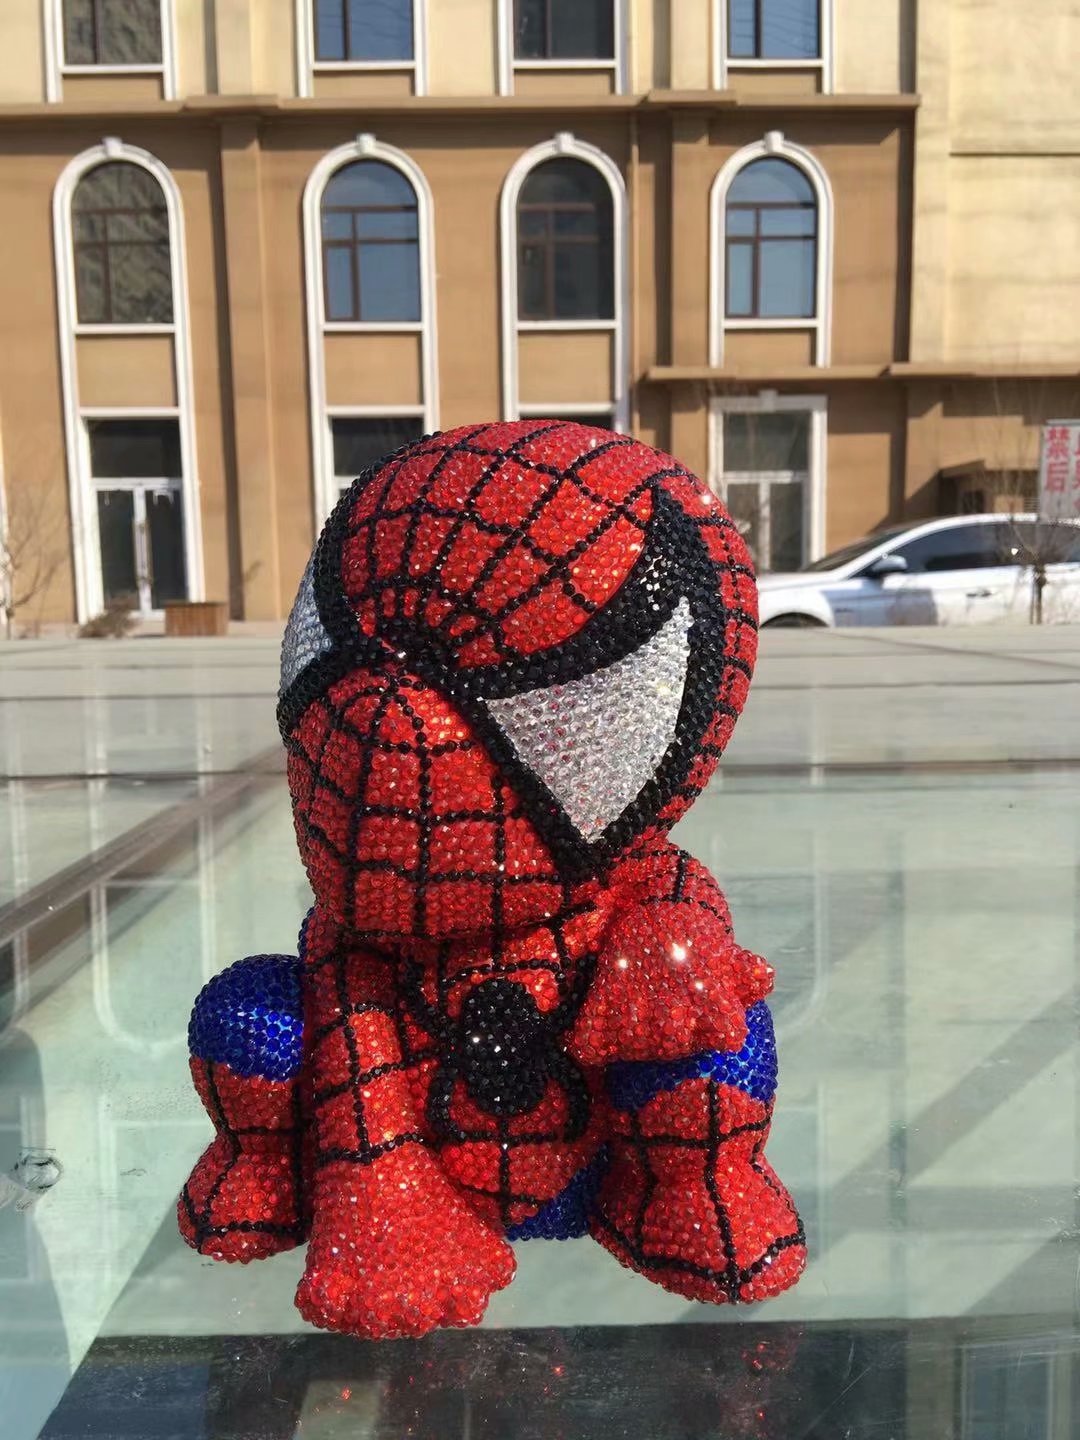 DIY Spiderman - Tirelire en strass avec strass en cristal (sans colle)